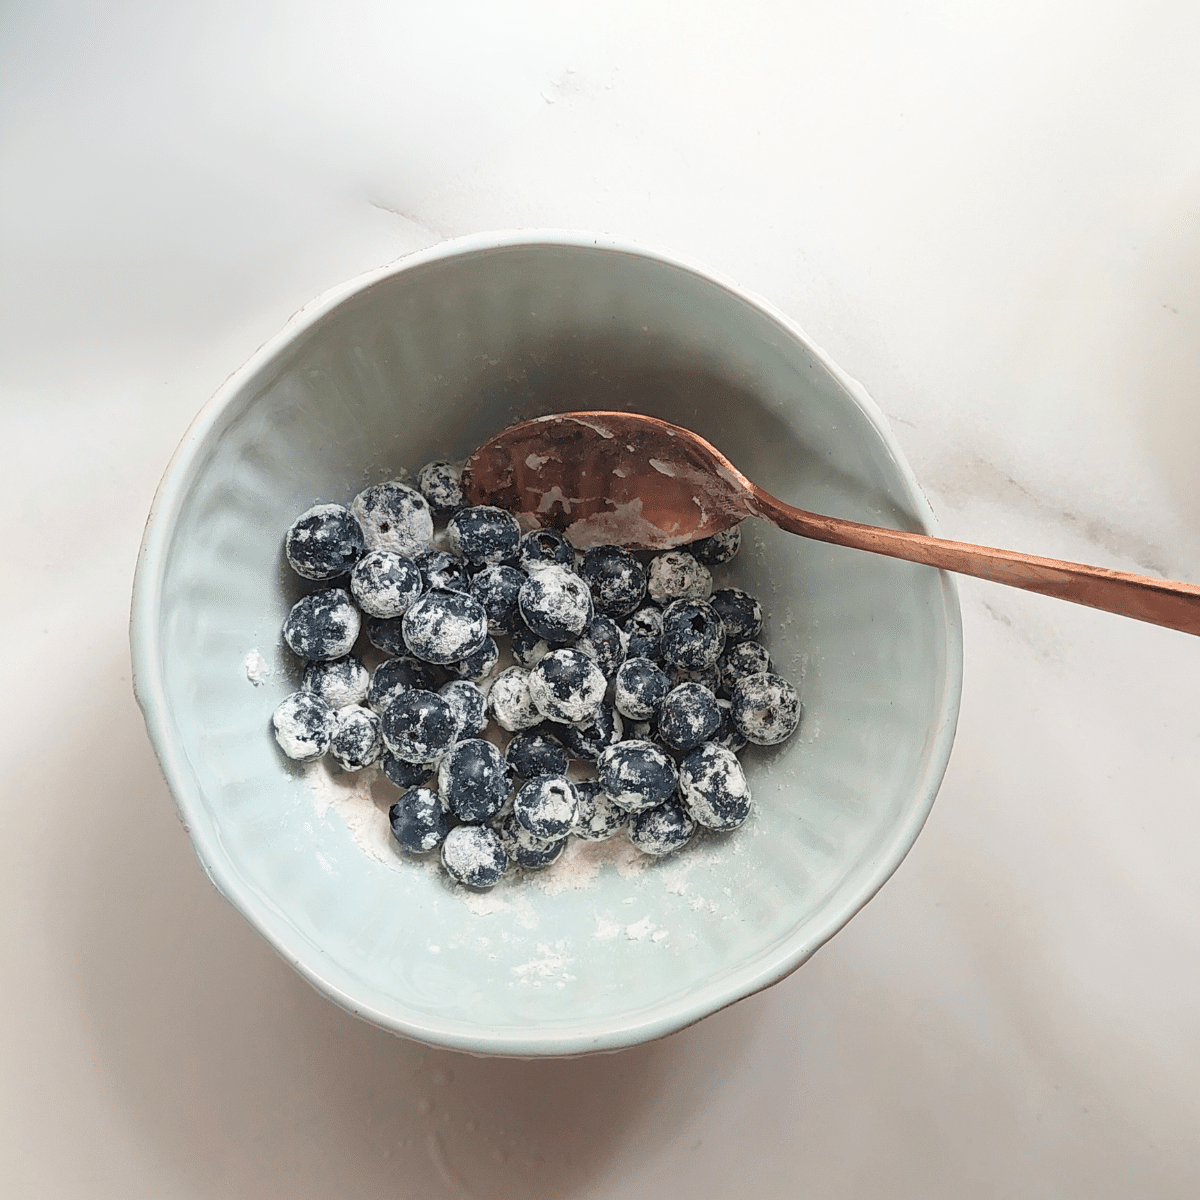 Toss blueberries in 1 teaspoon flour